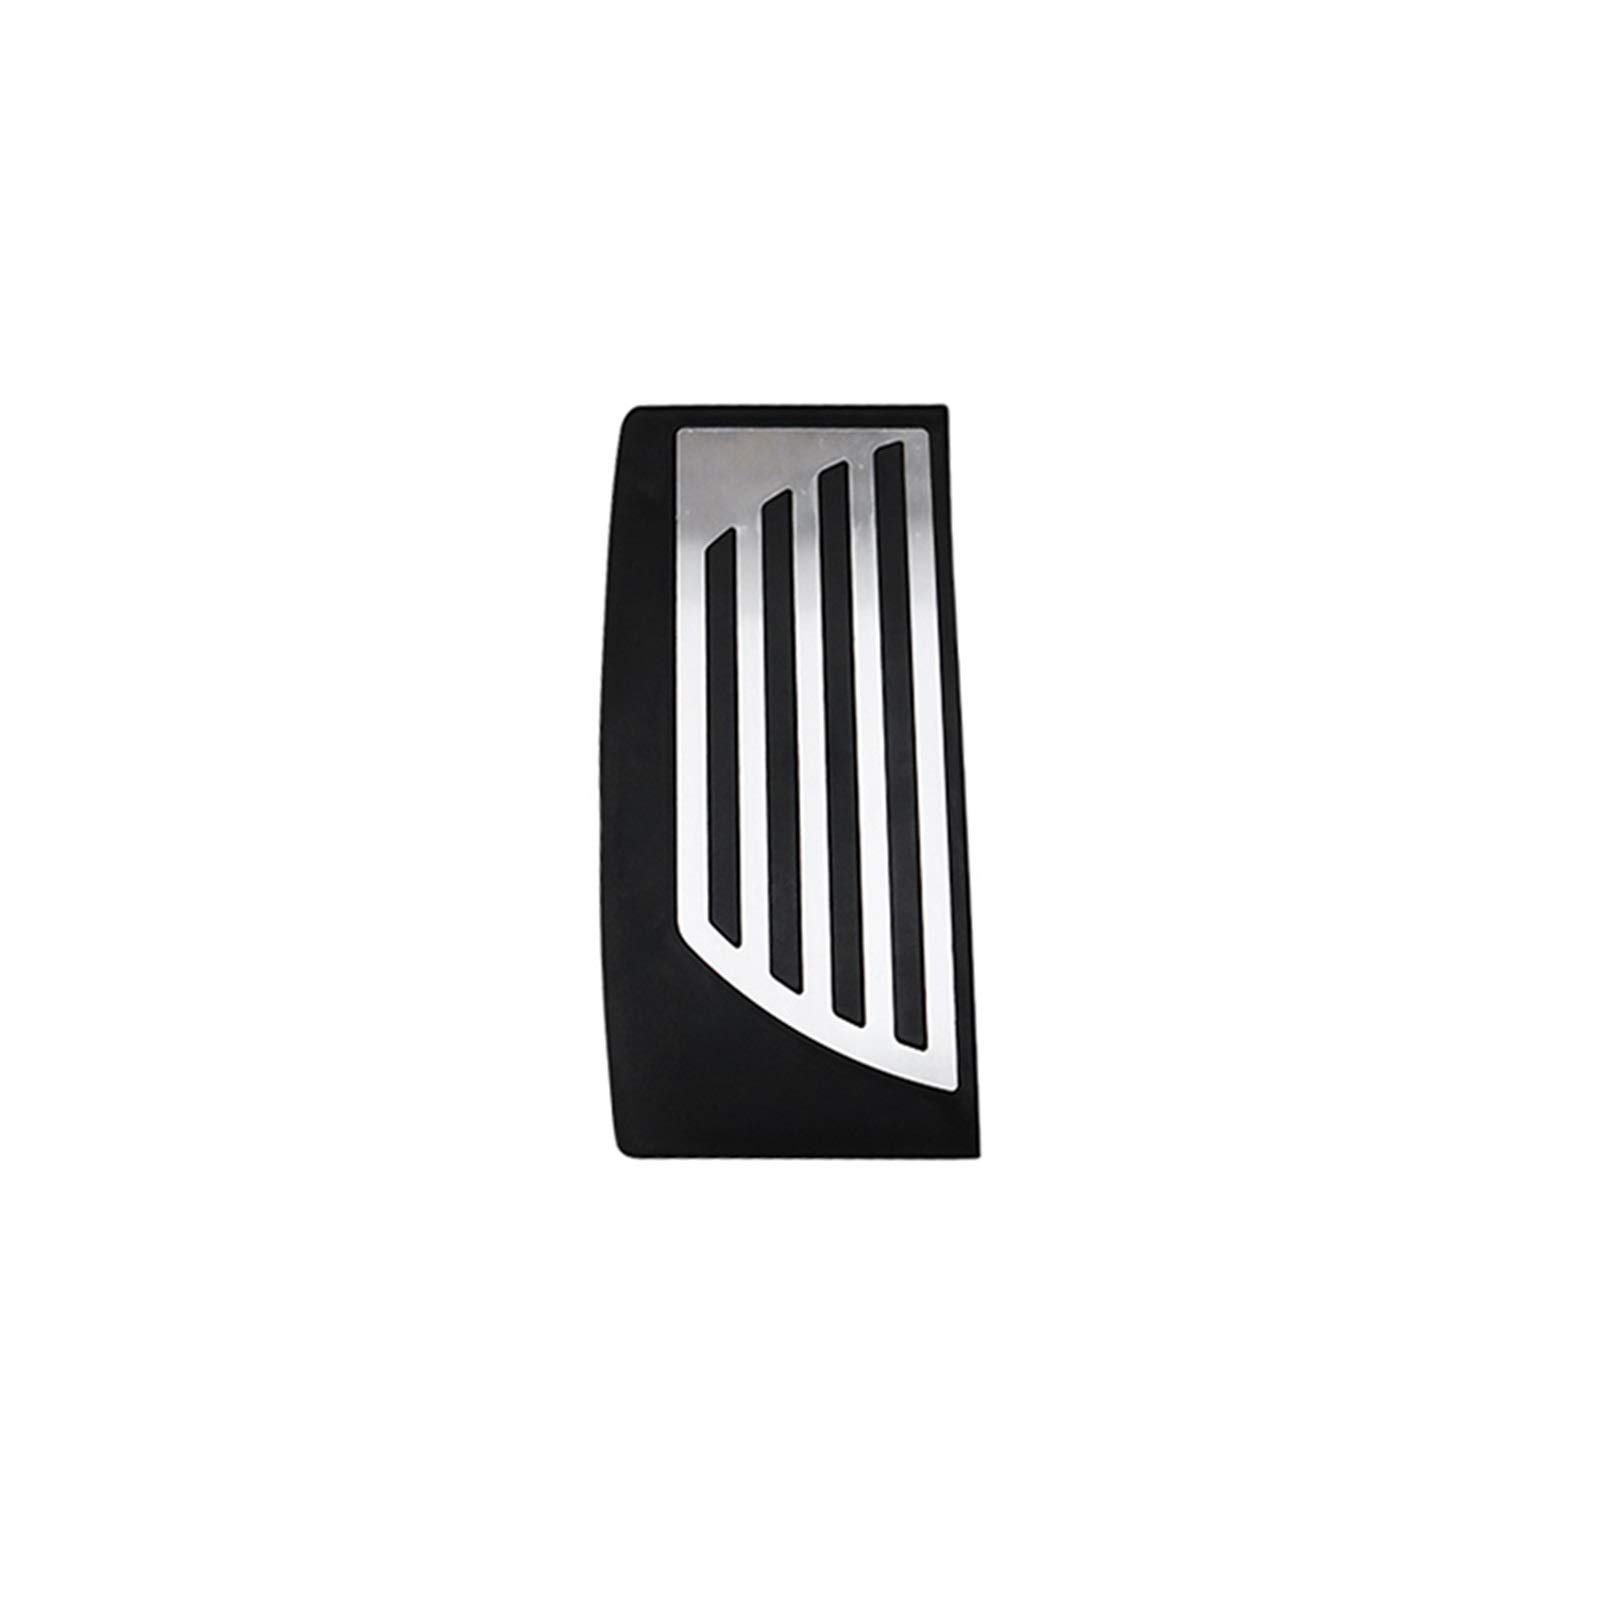 VLZUNO Aluminium Auto Gaspedal Bremspedal Fußstütze Pedalplattenabdeckung AT, for ALFA Romeo, Giulia Stelvio 2017 2018 Zubehör Auto-Fußpedale(Footrest Pedal 1pcs) von VLZUNO